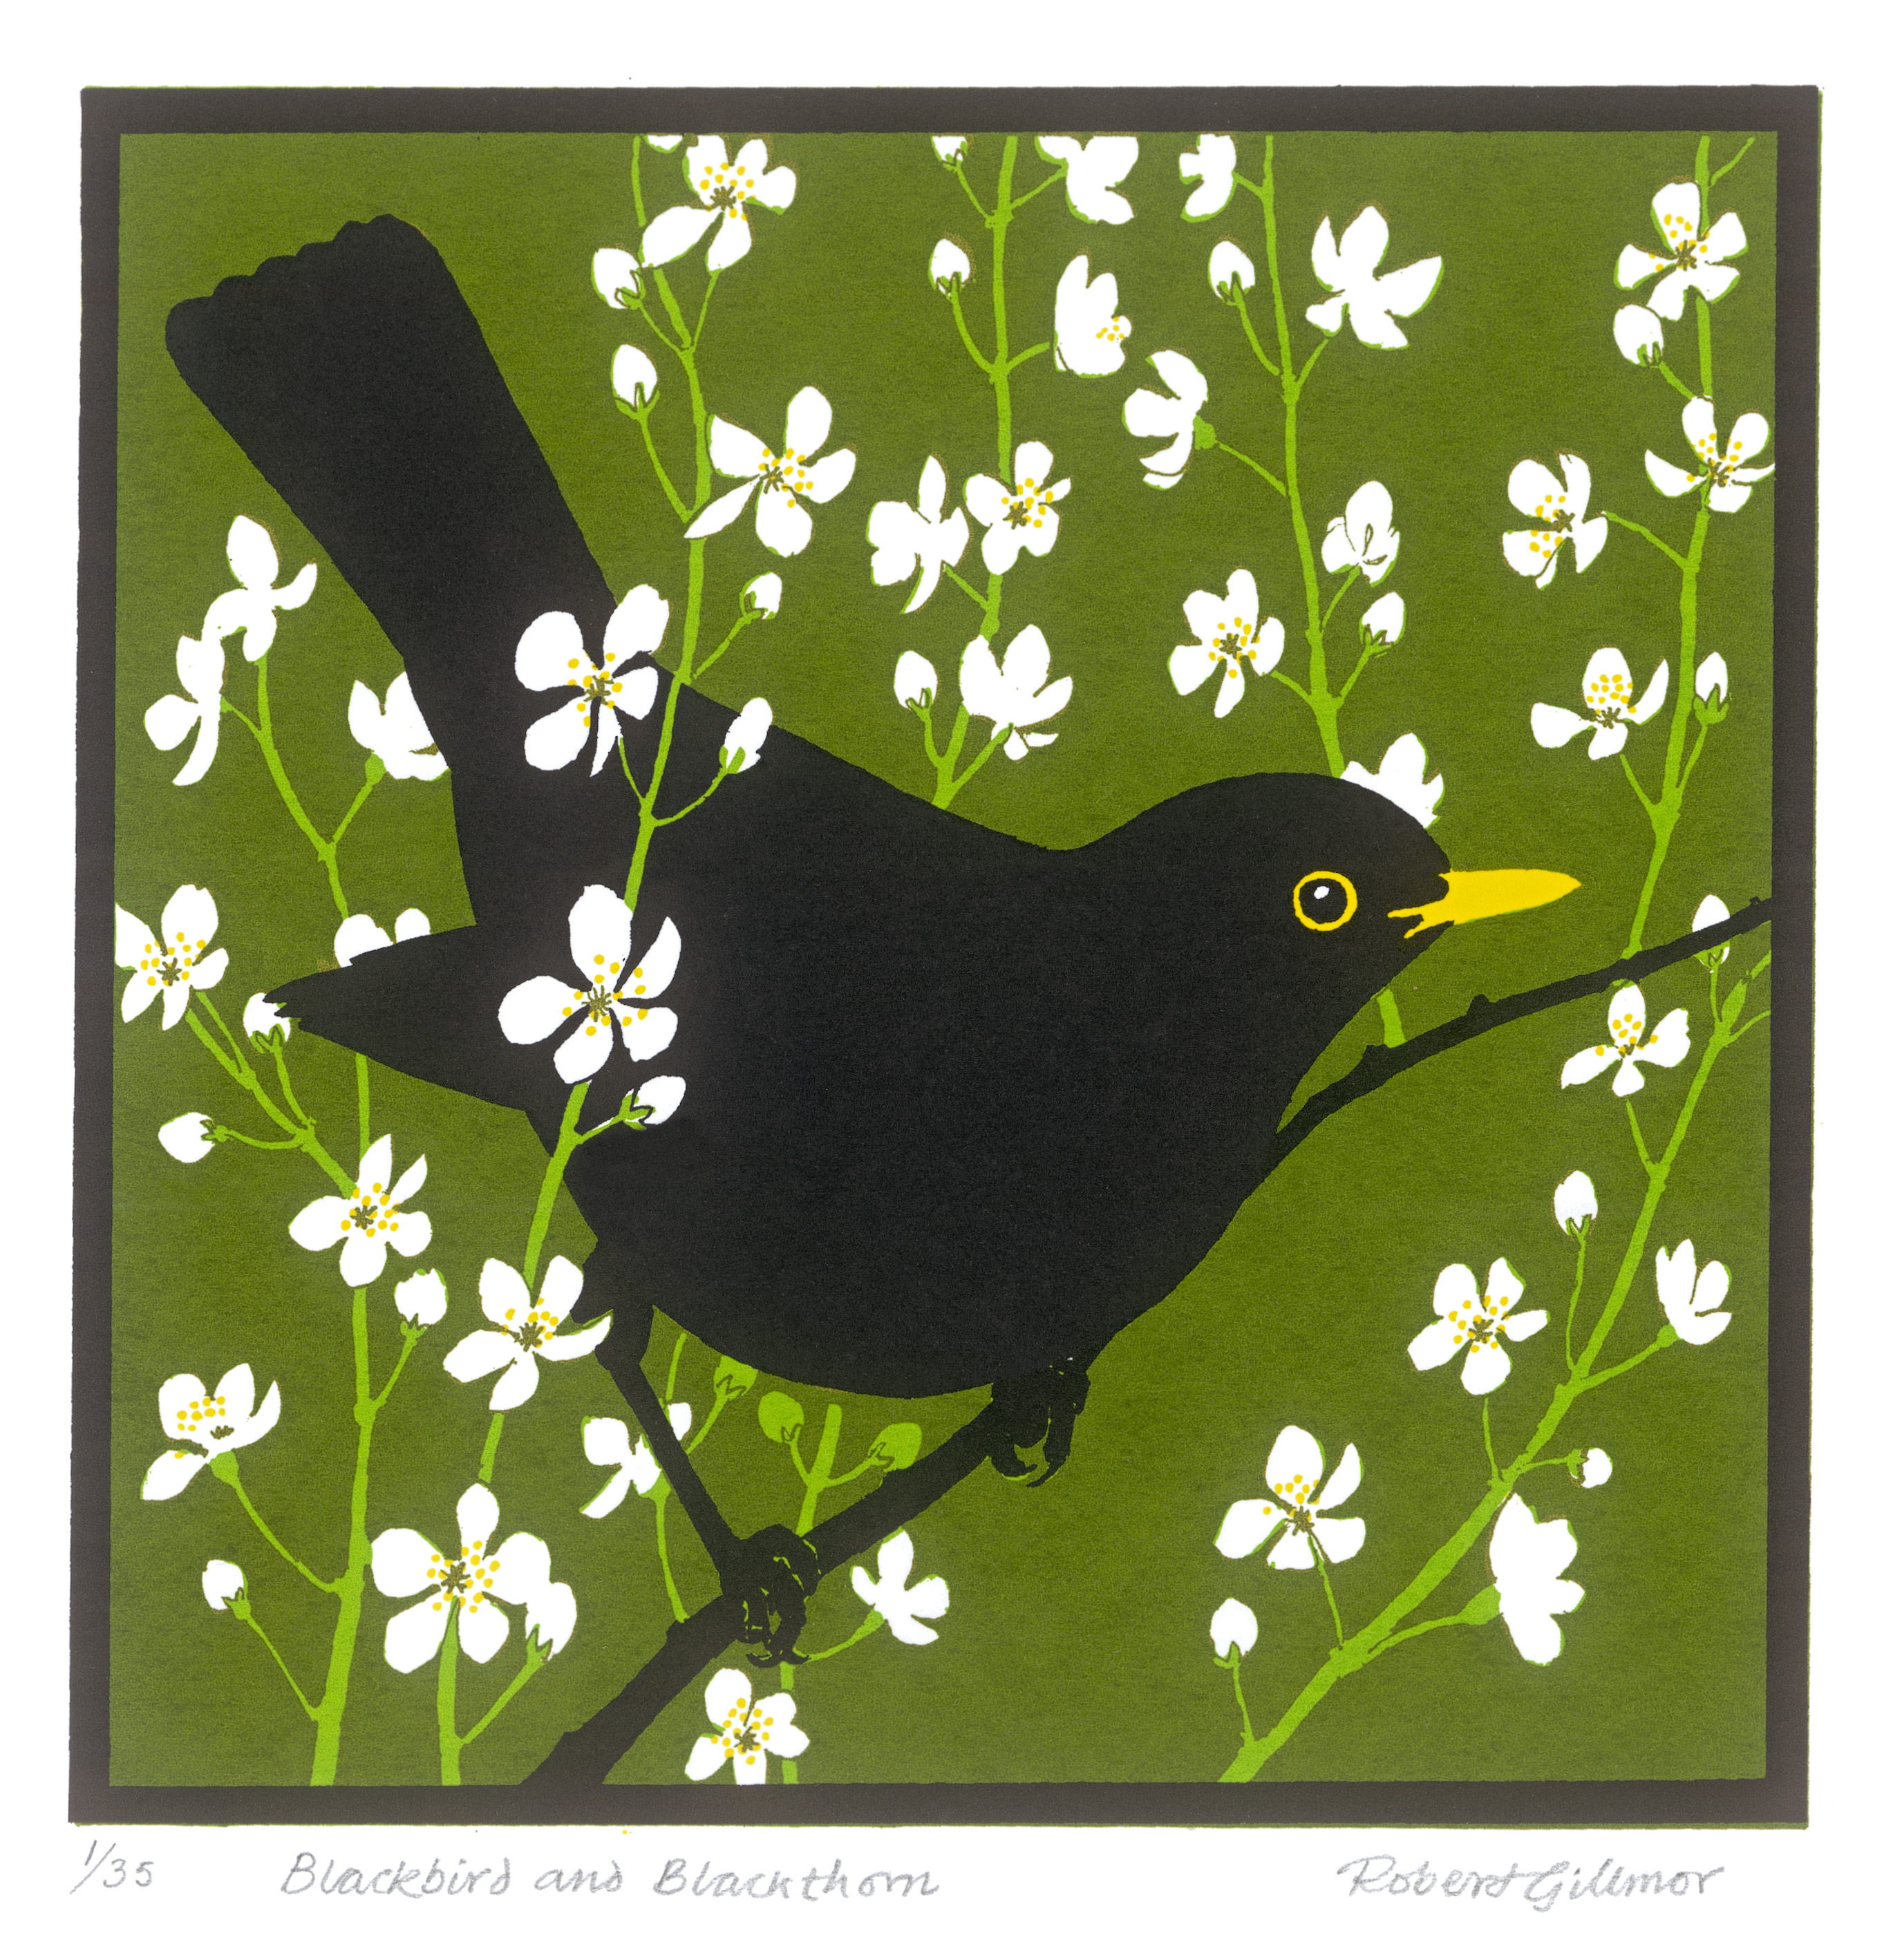 <p>Blackbird Blackthorn by Robert Gillmor</p>